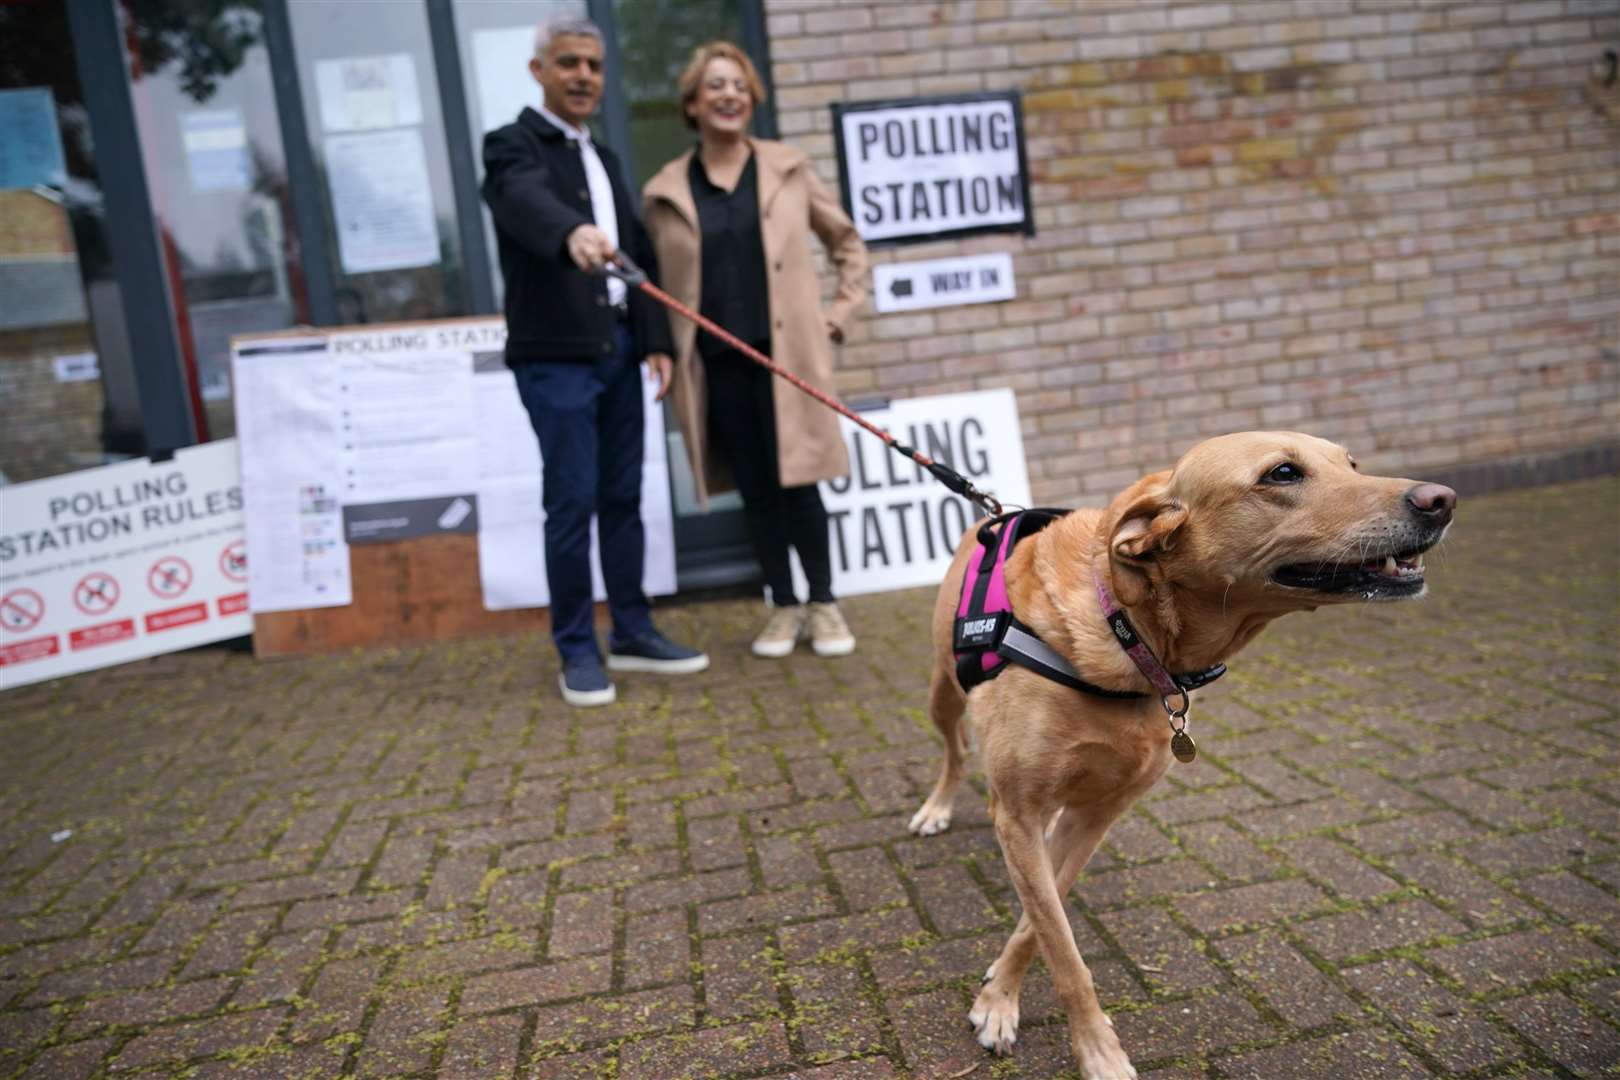 Sadiq Khan with his wife Saadiya Khan and dog Luna visited a polling station in south London (Yui Mok/PA)